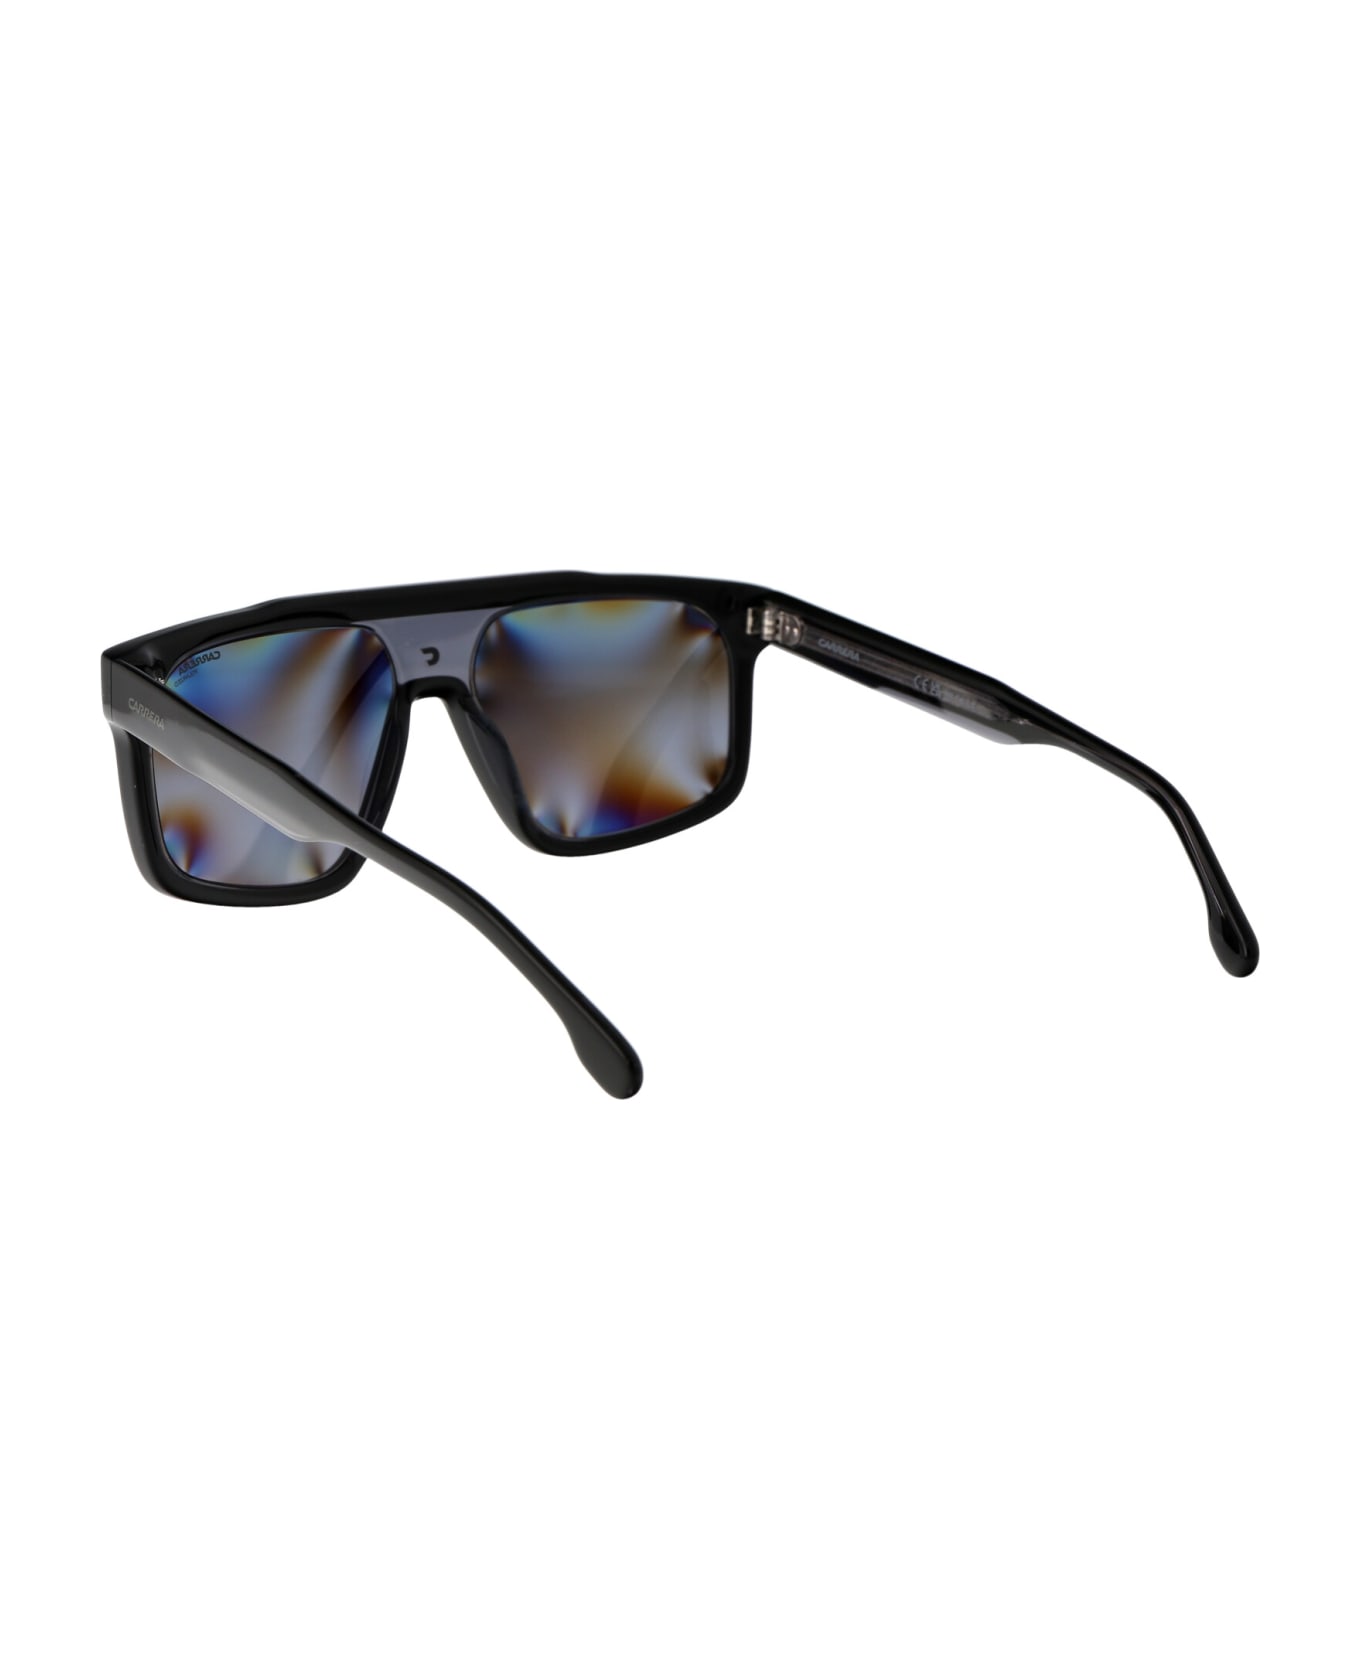 Carrera 1061/s Sunglasses - 08AM9 BLACK GREY サングラス